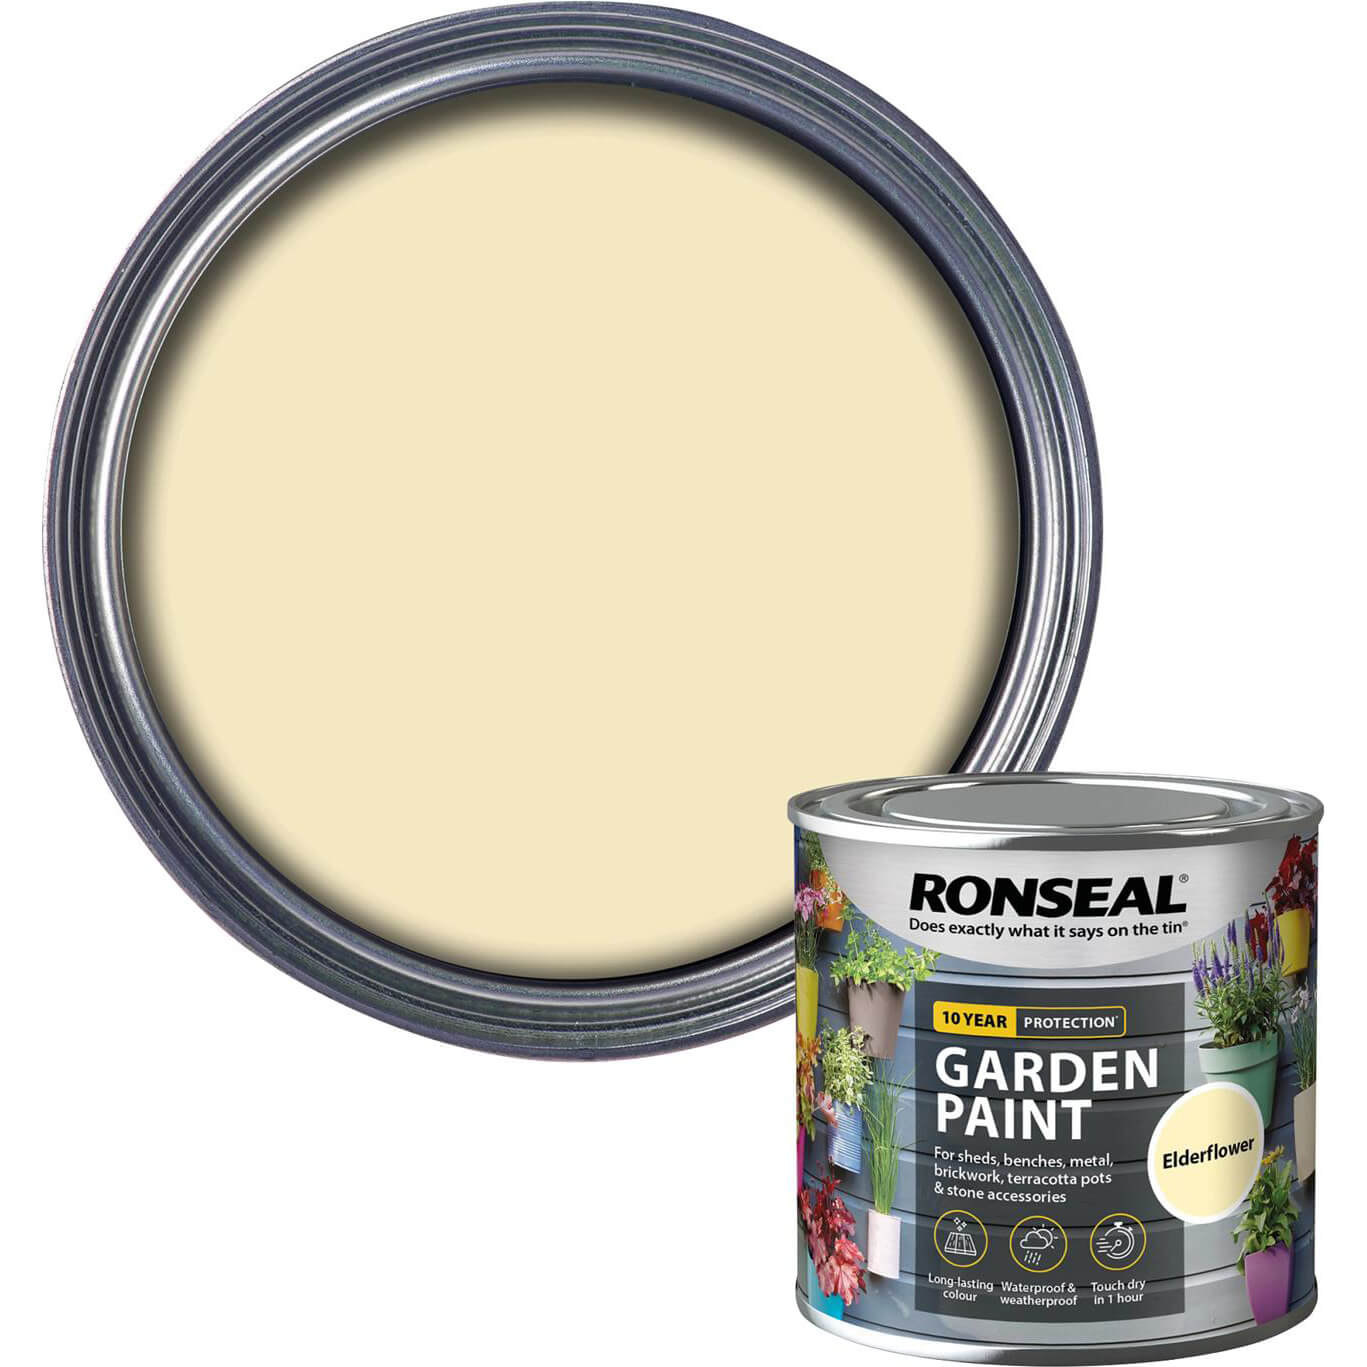 Image of Ronseal General Purpose Garden Paint Elderflower 250ml